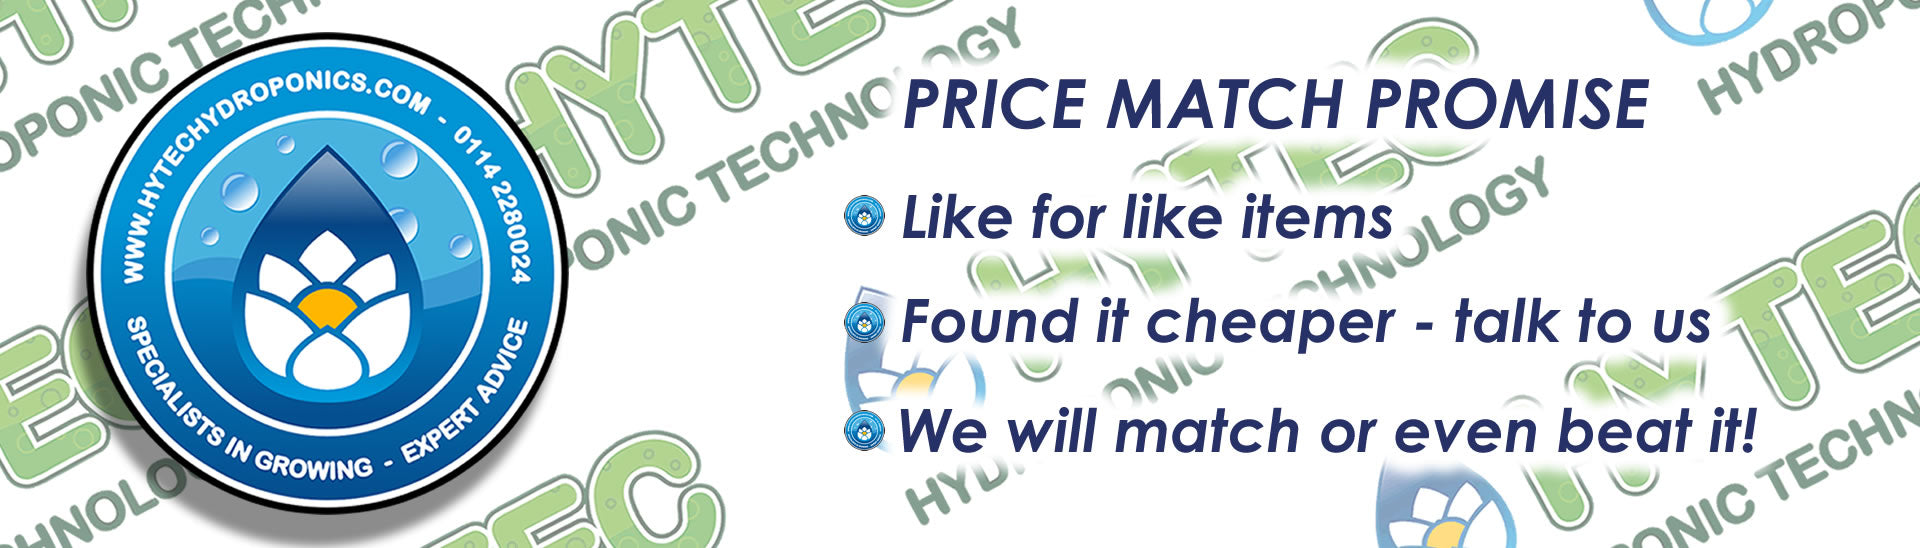 Hydroponics Price Match Promise